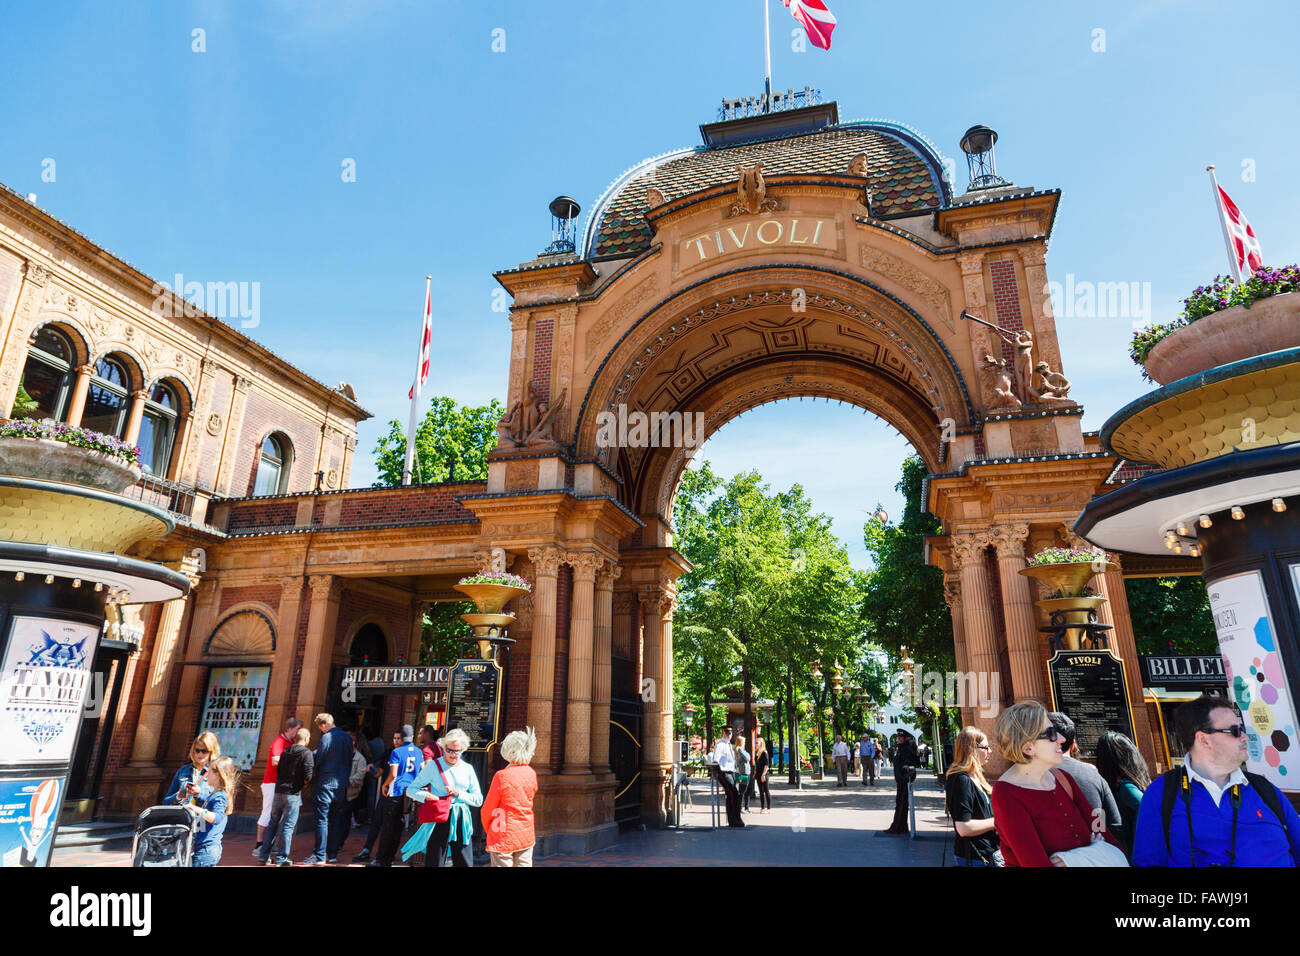 People by entrance gate to Tivoli Gardens amusement park. Copenhagen, Zealand, Denmark, Scandinavia Stock Photo